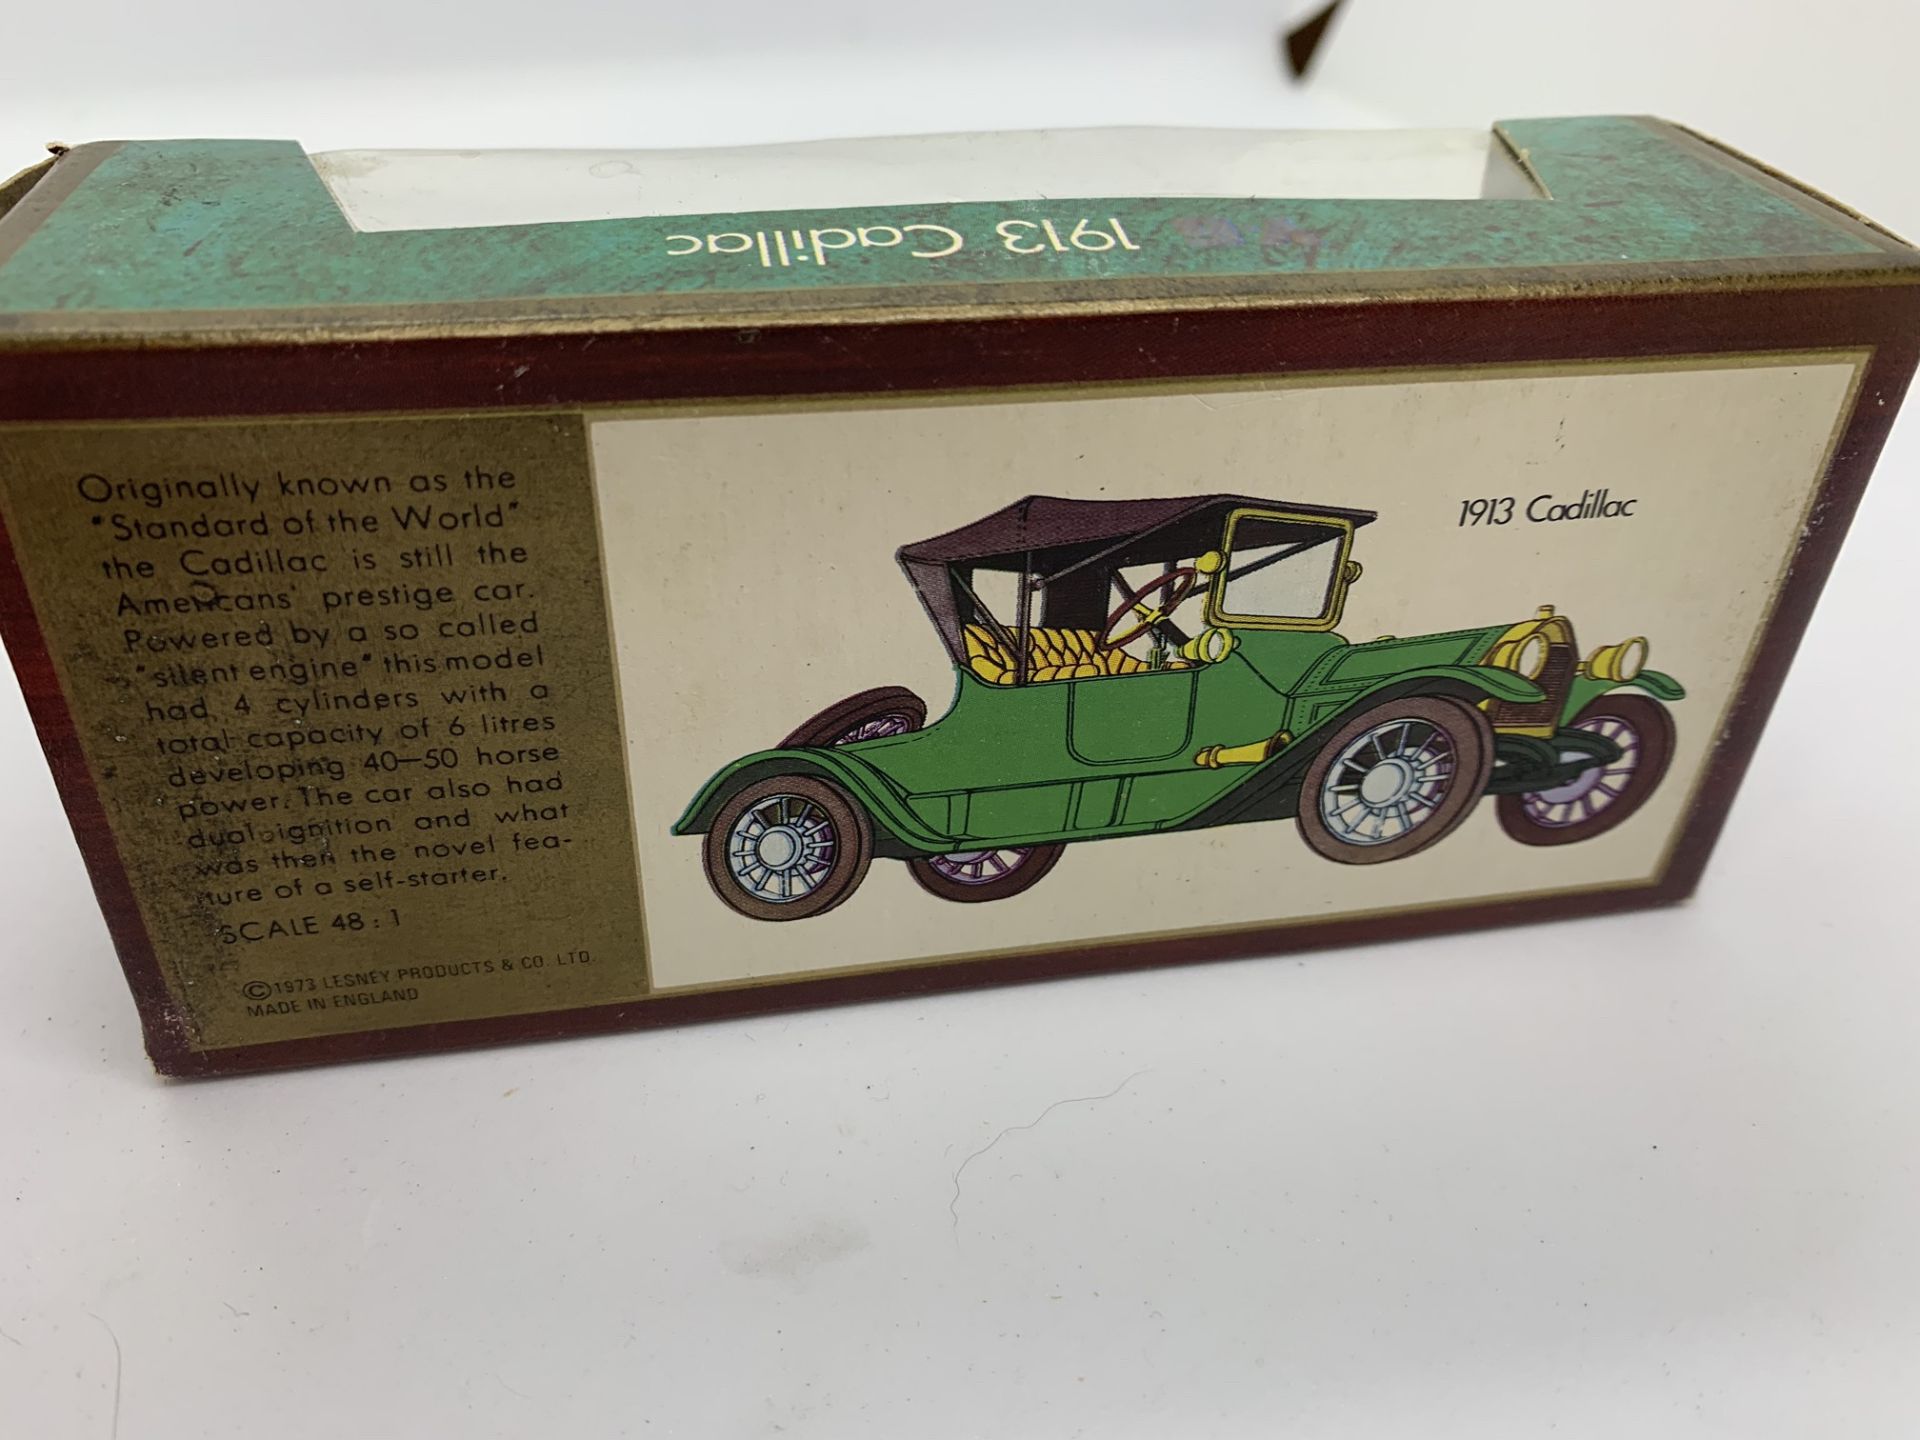 BOXED MATCHBOX 1913 CADILLAC CAR - Image 2 of 2